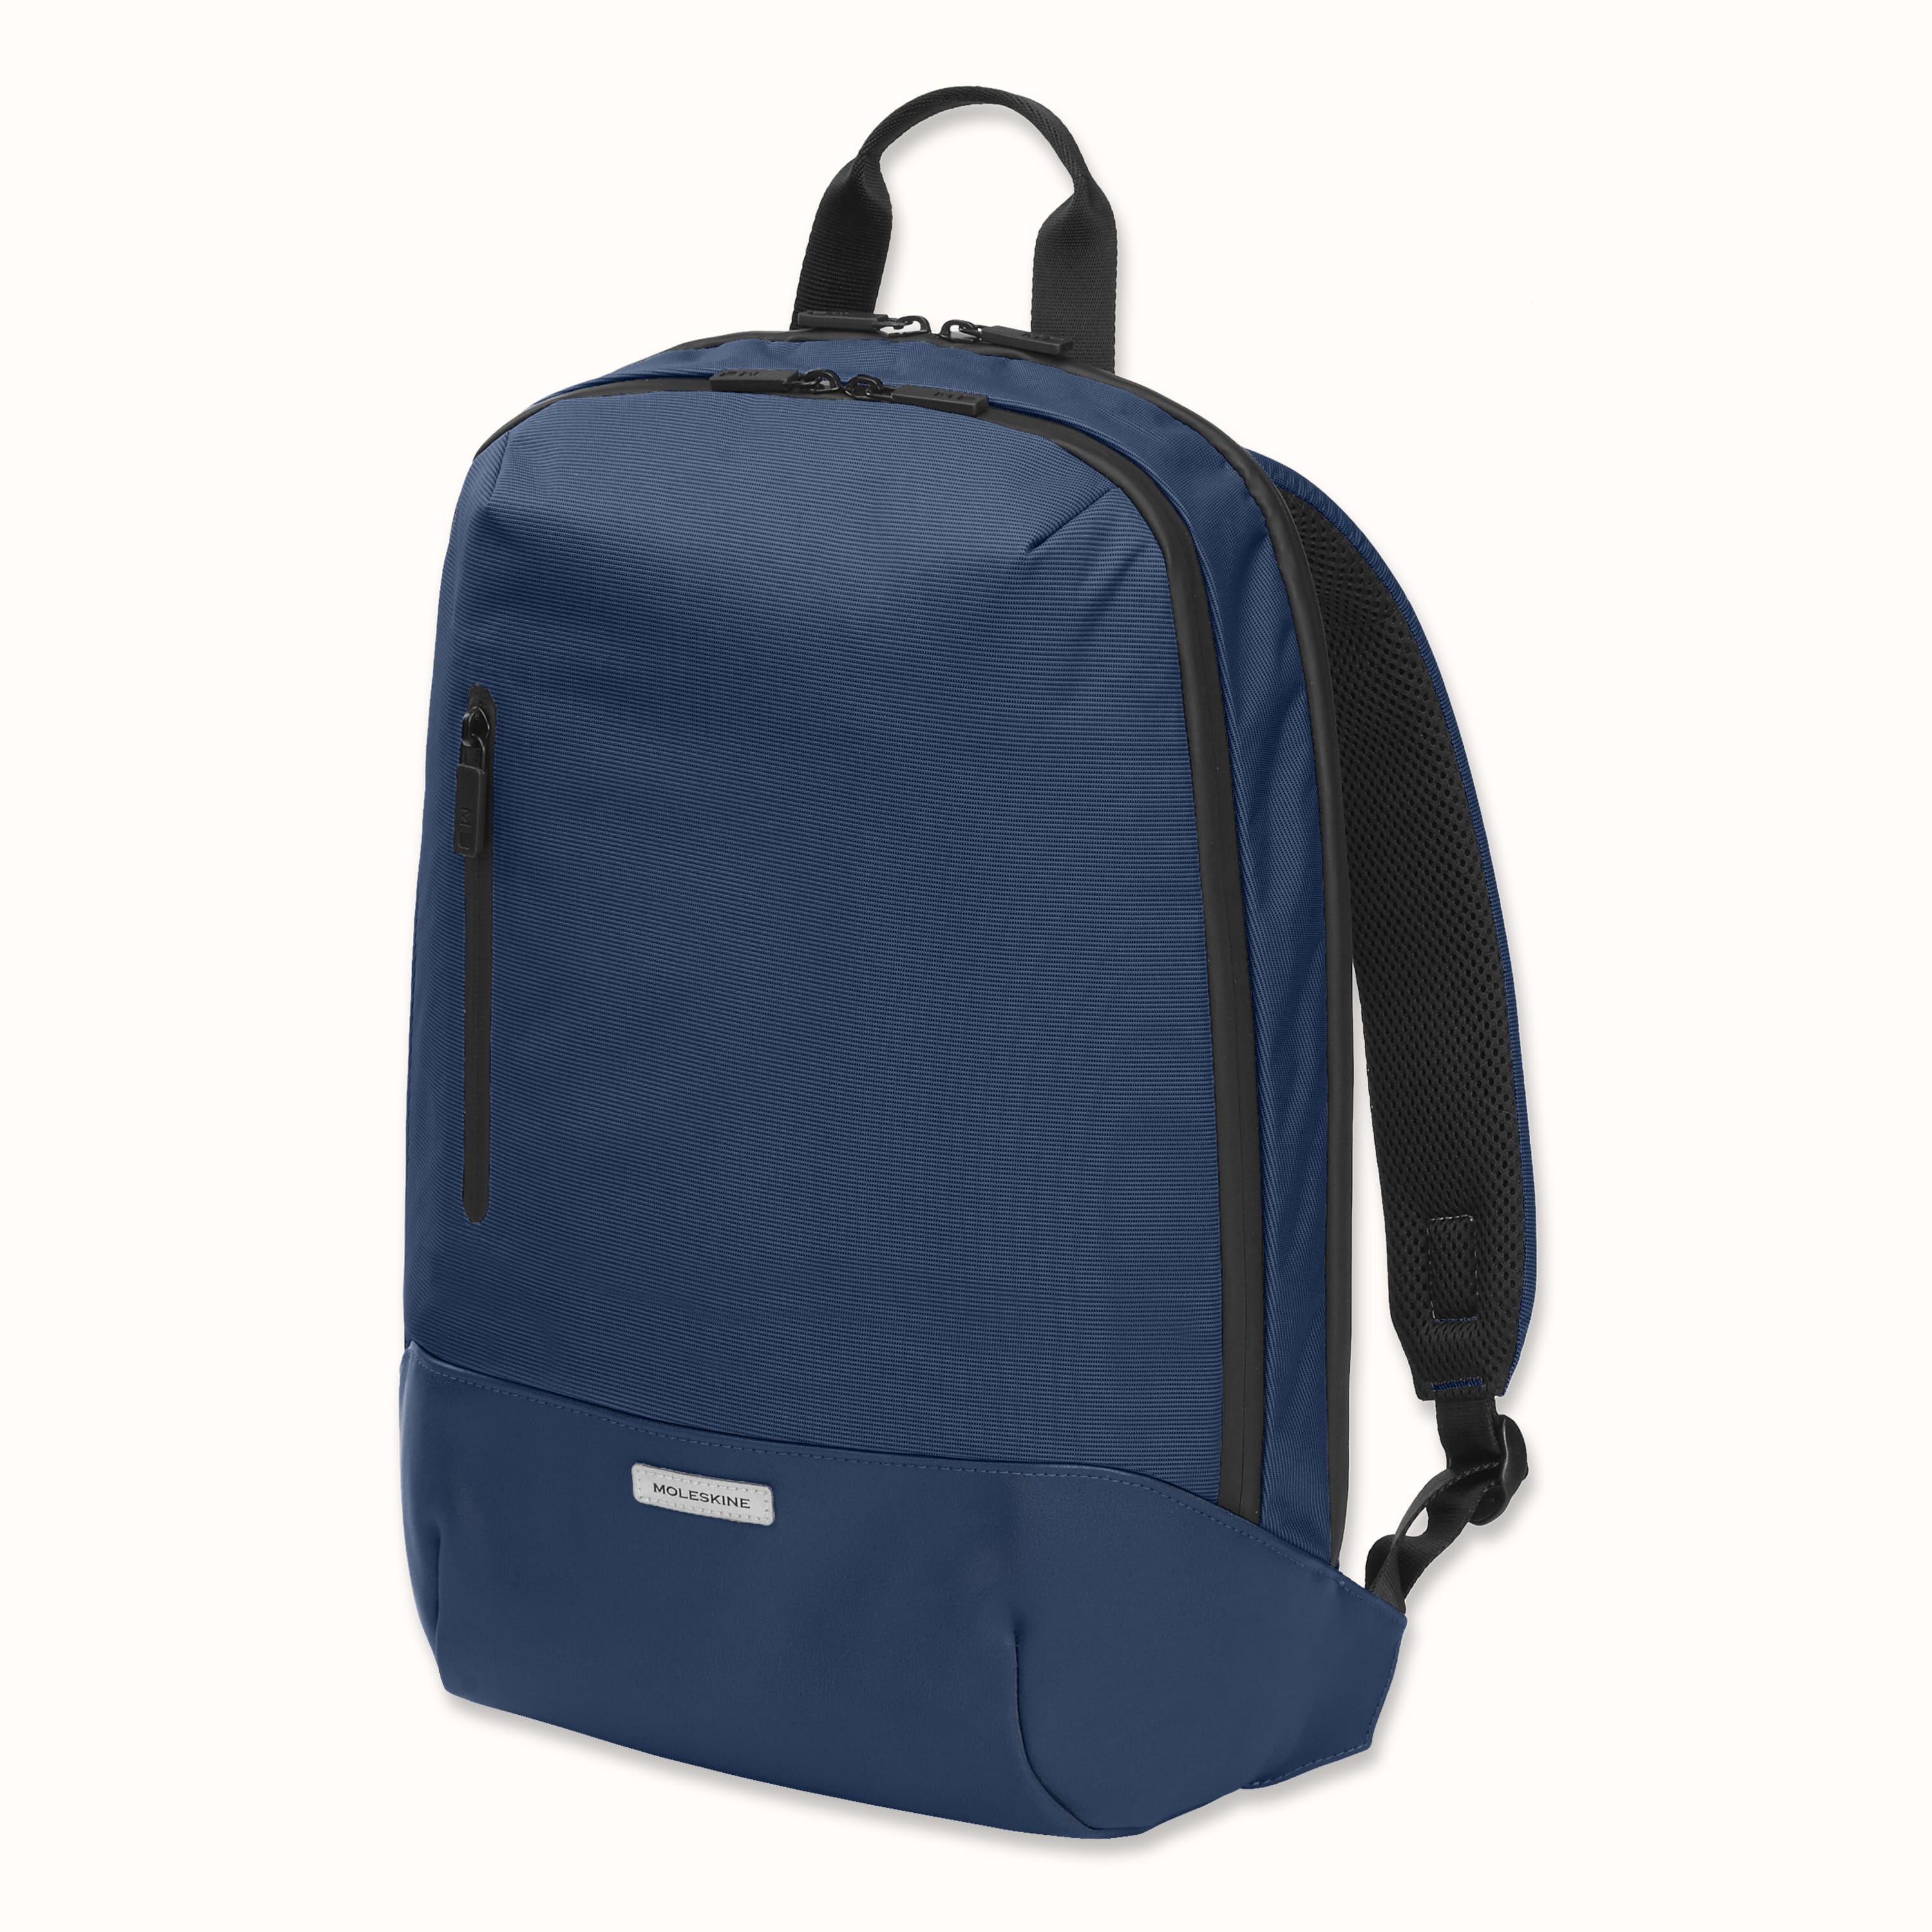 Moleskine® Metro Rolltop Backpack | MyShopAngel Promotional Products